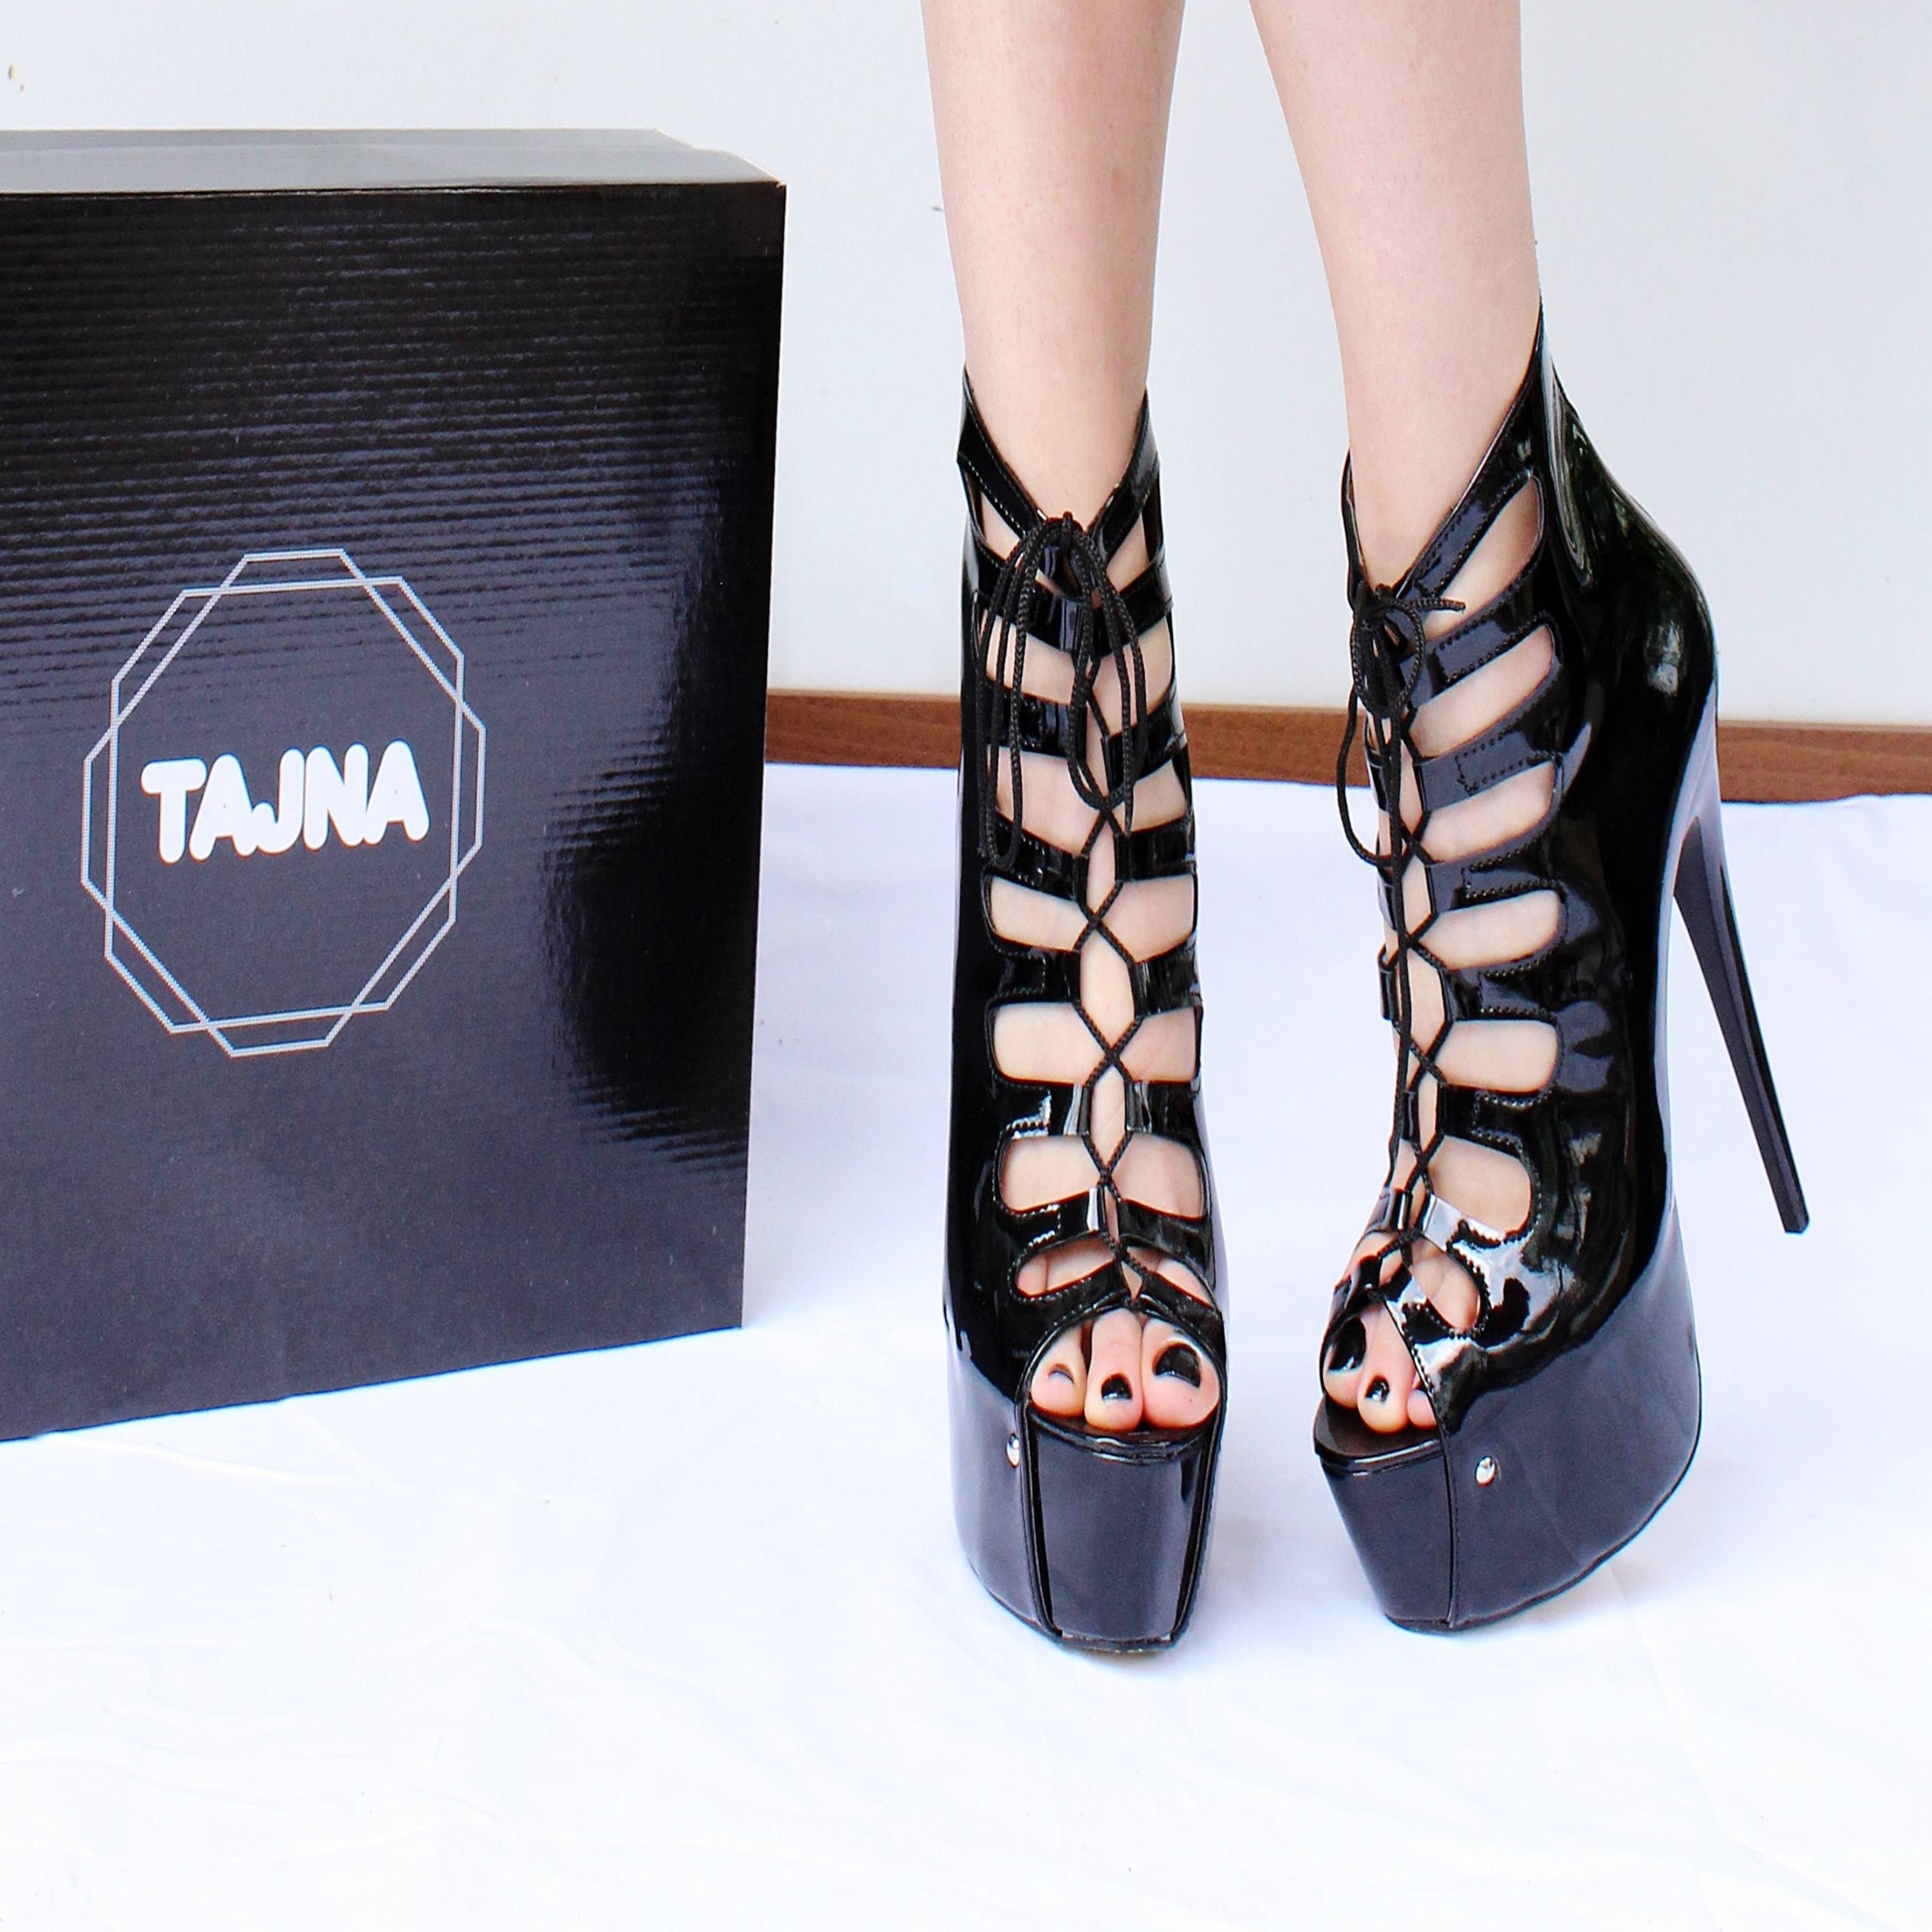 Gladiator Black Patent Leather Peep Toe Platform Shoes - Tajna Club